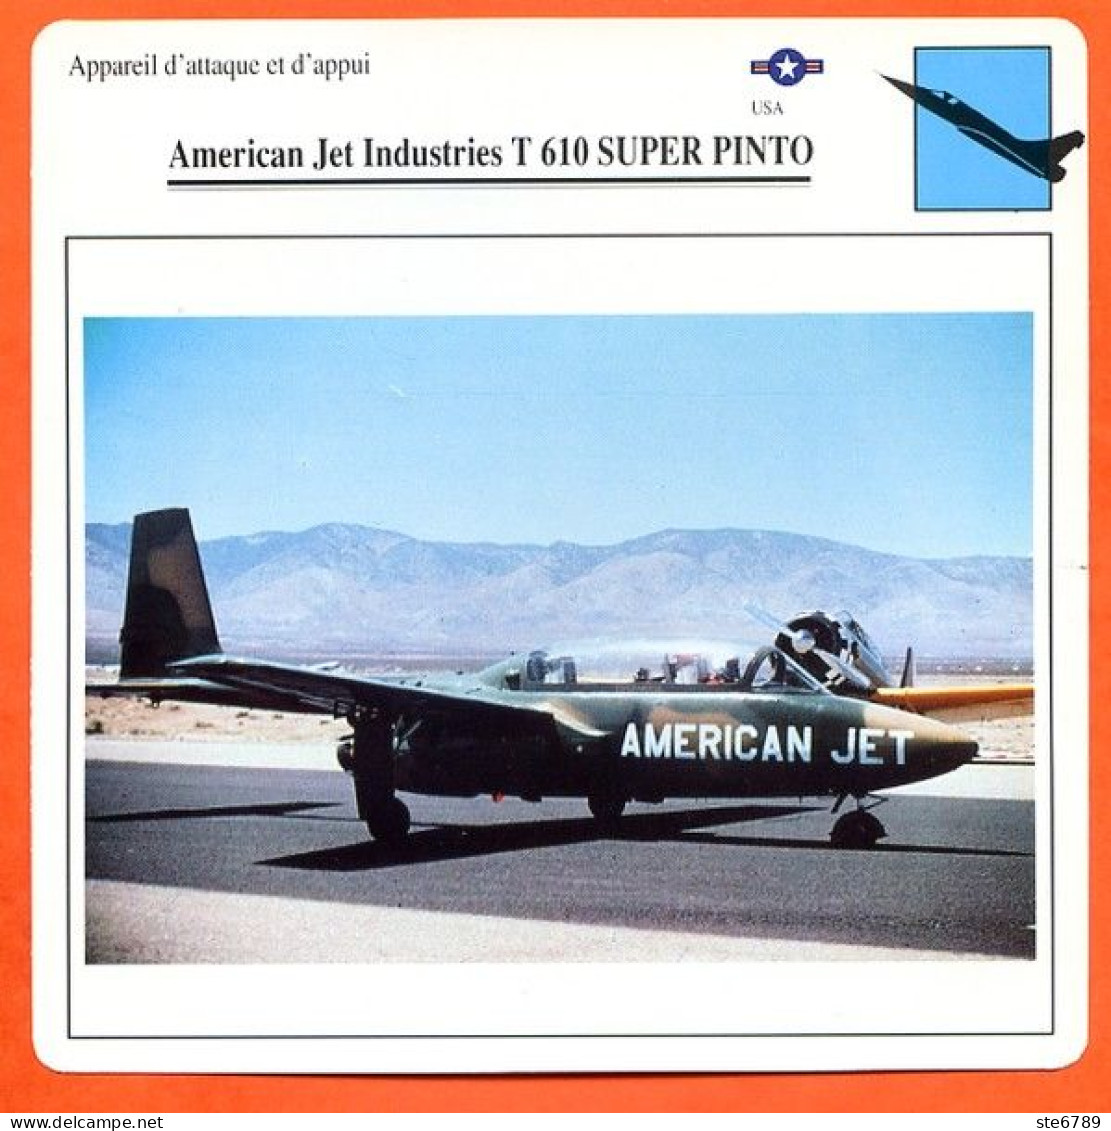 Fiche Aviation American Jet Industries T 610 SUPER PINTO / Avion Attaque Et Appui  USA  Avions - Avions